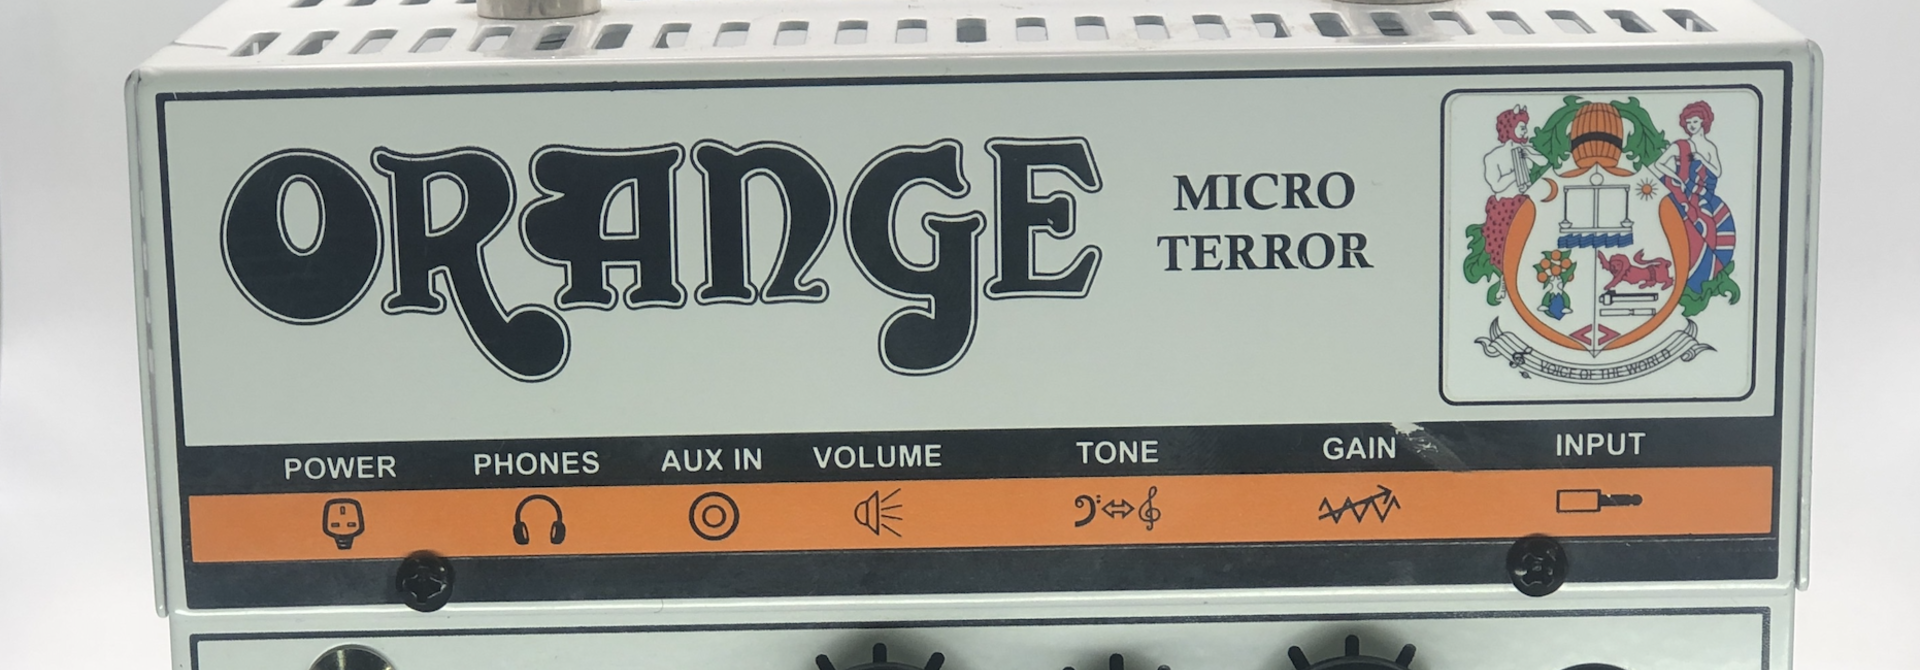 Orange MT20 Micro Terror 20-Watt Guitar Amp Head - White